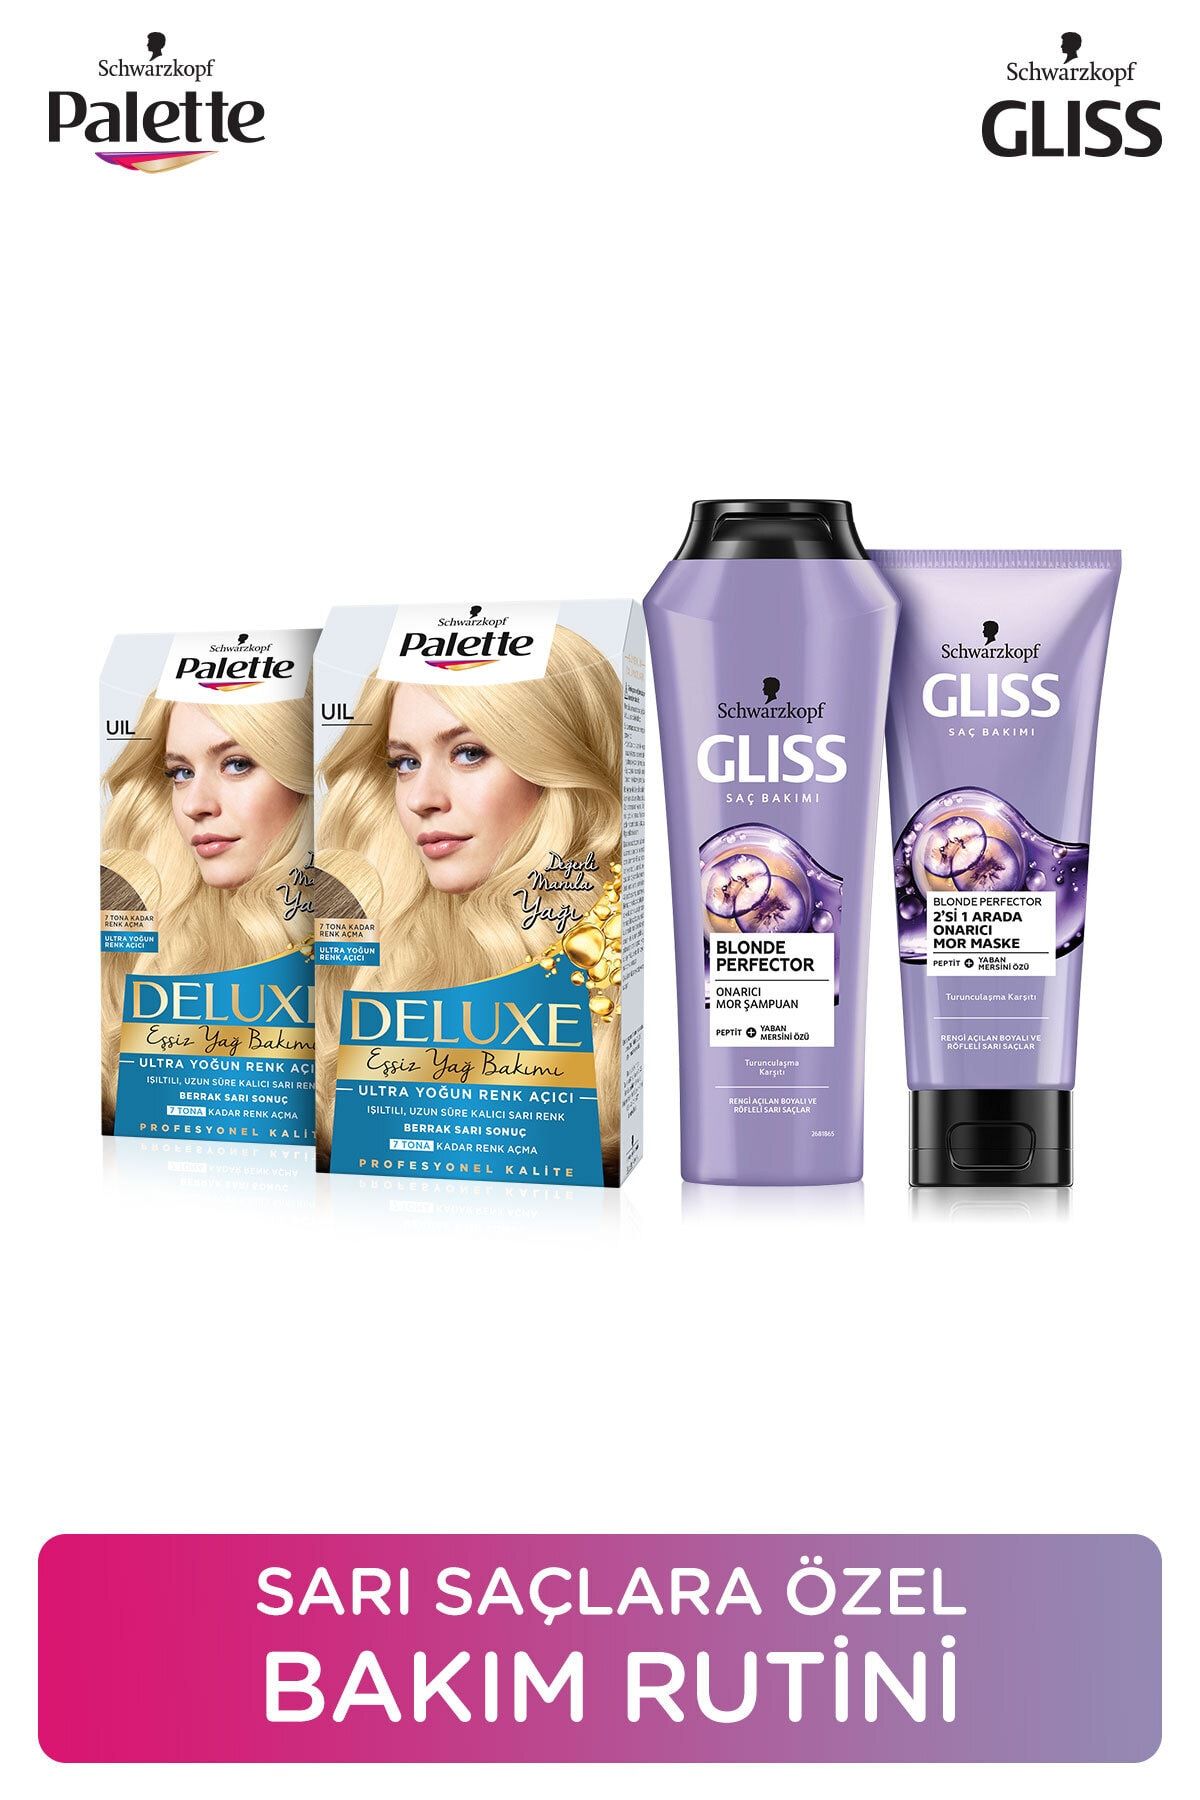 Gliss Uıl Ultra Yoğun Renk Açıcıx2adet+blonde Perfector Mor Şampuan 250ml+blonde Perfector Mor Maske 200ml